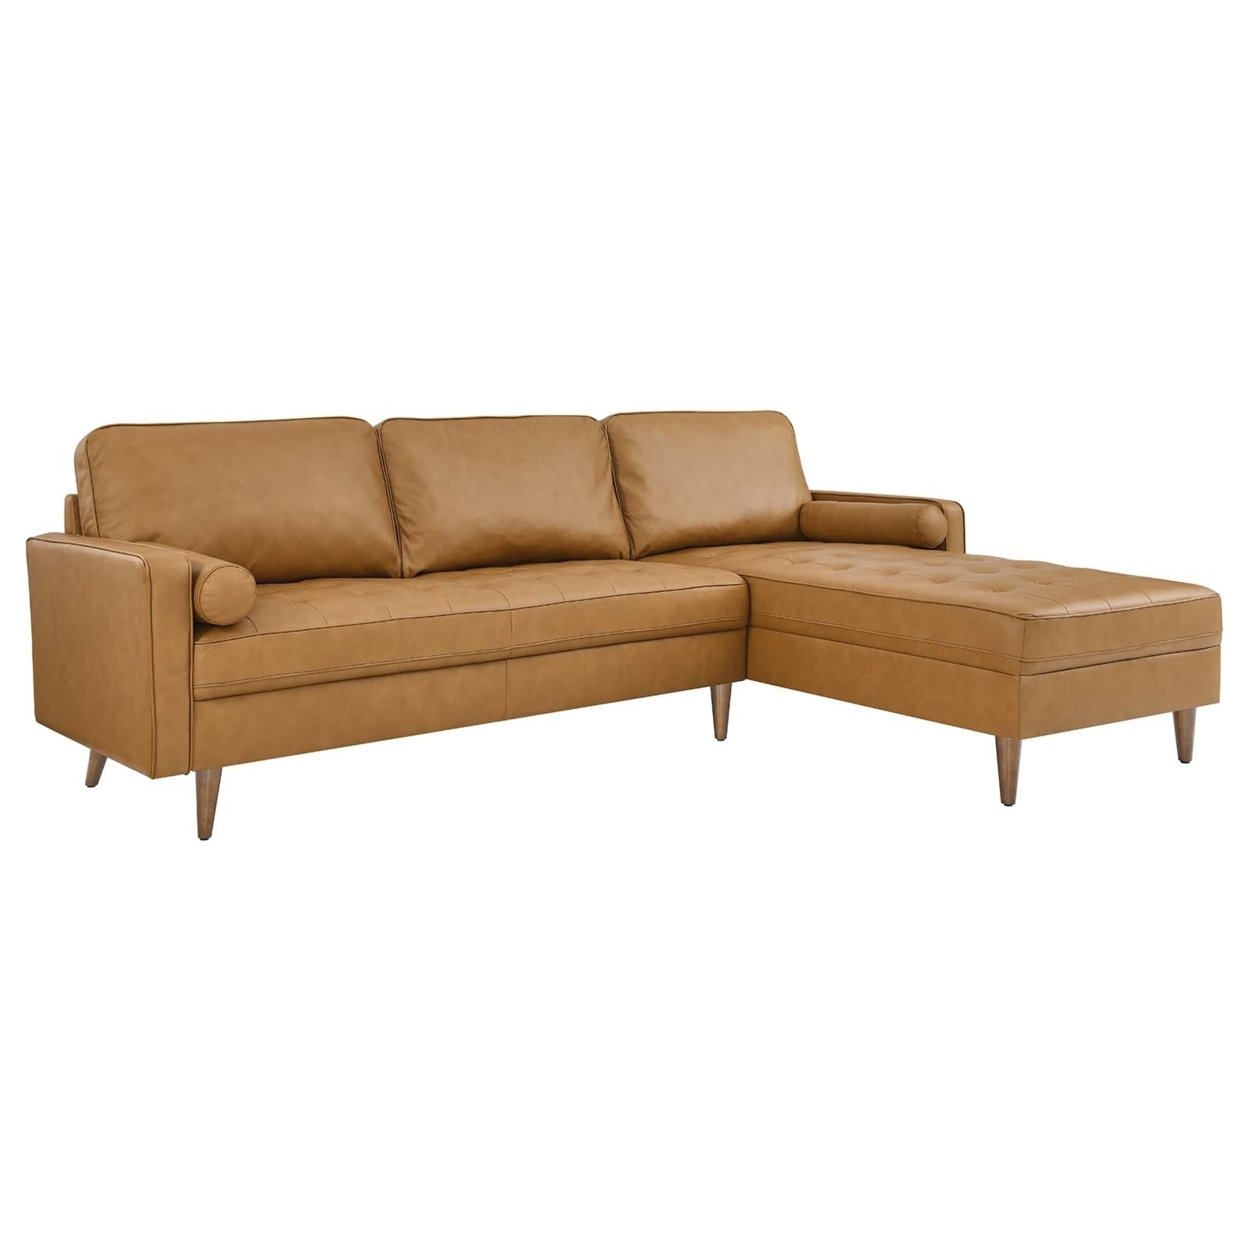 Valour 98 Leather Sectional Sofa, Tan